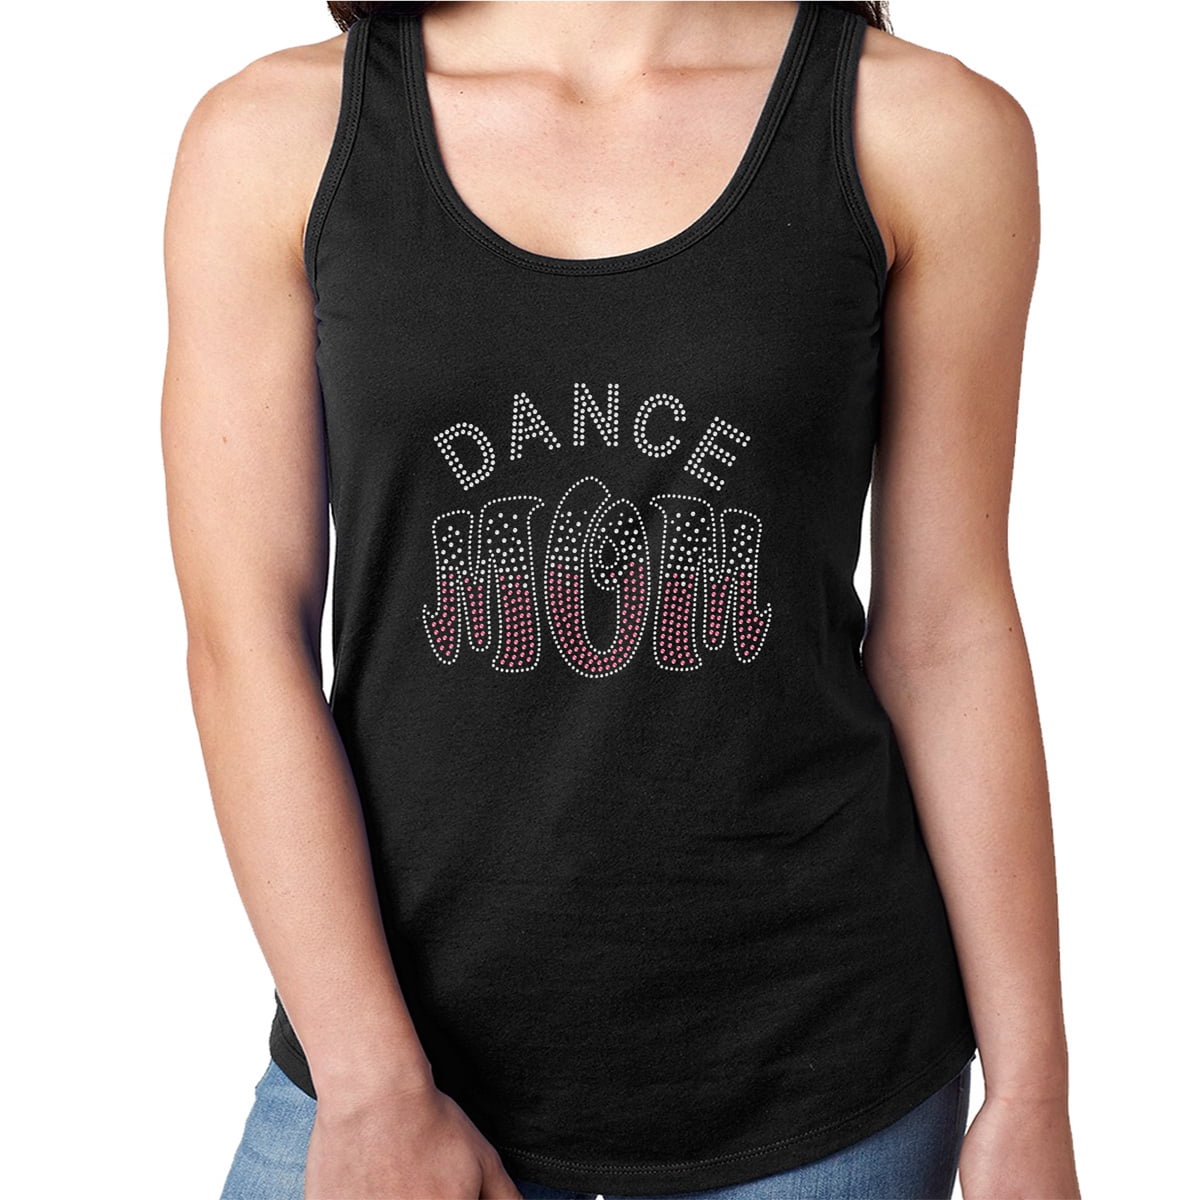 I LOVE DANCE Childrens T Shirt CRYSTAL Rhinestone Dance Design...Kids any size